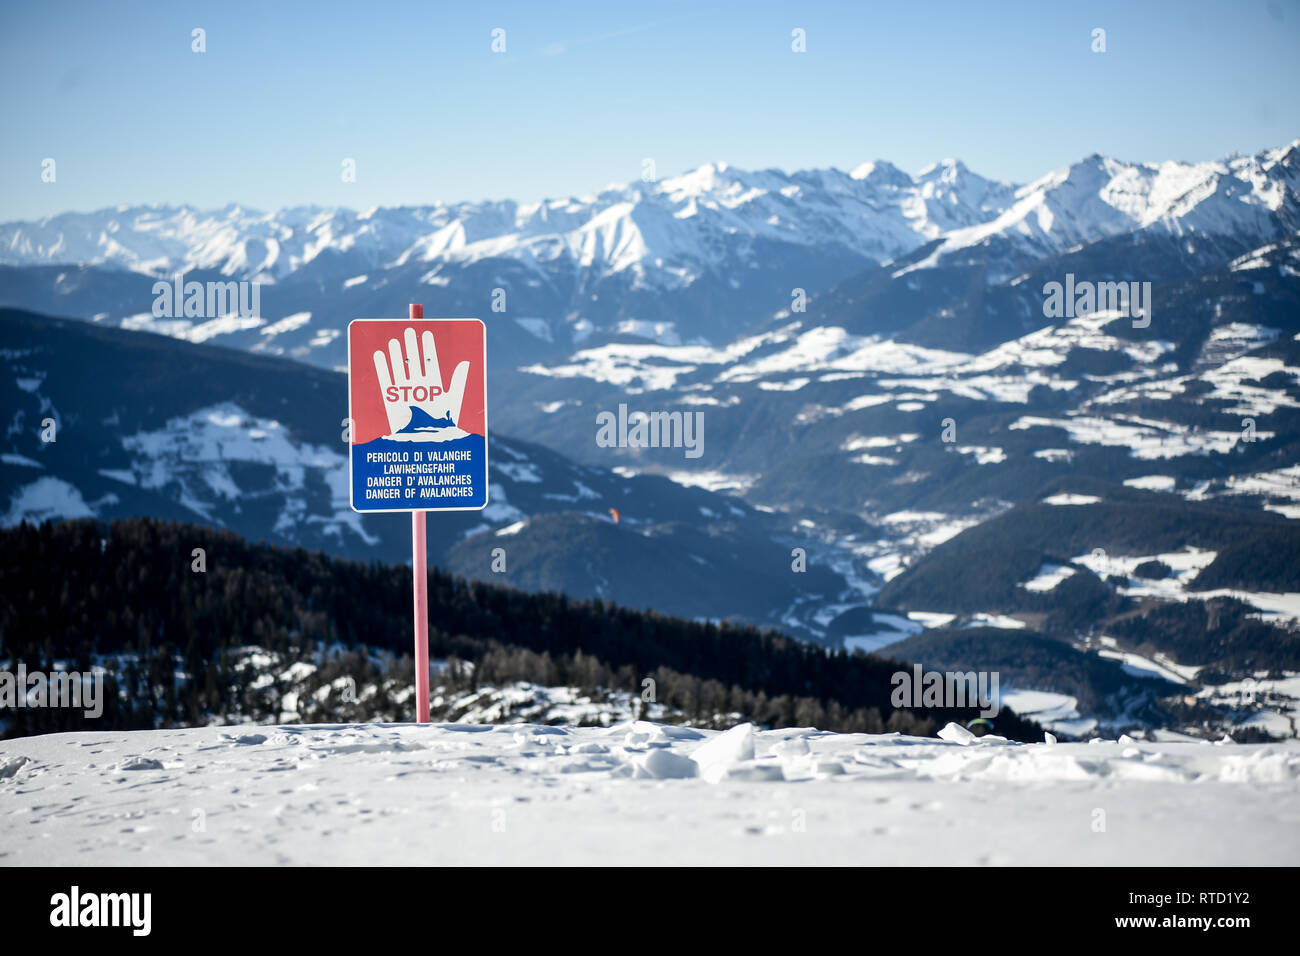 Kronplatz, South Tyrol, Italy - February 15, 2019: Danger of Avalanches warning  sign on snowy mountain slope in Kronplatz Plan de Corones ski resort  Stock Photo